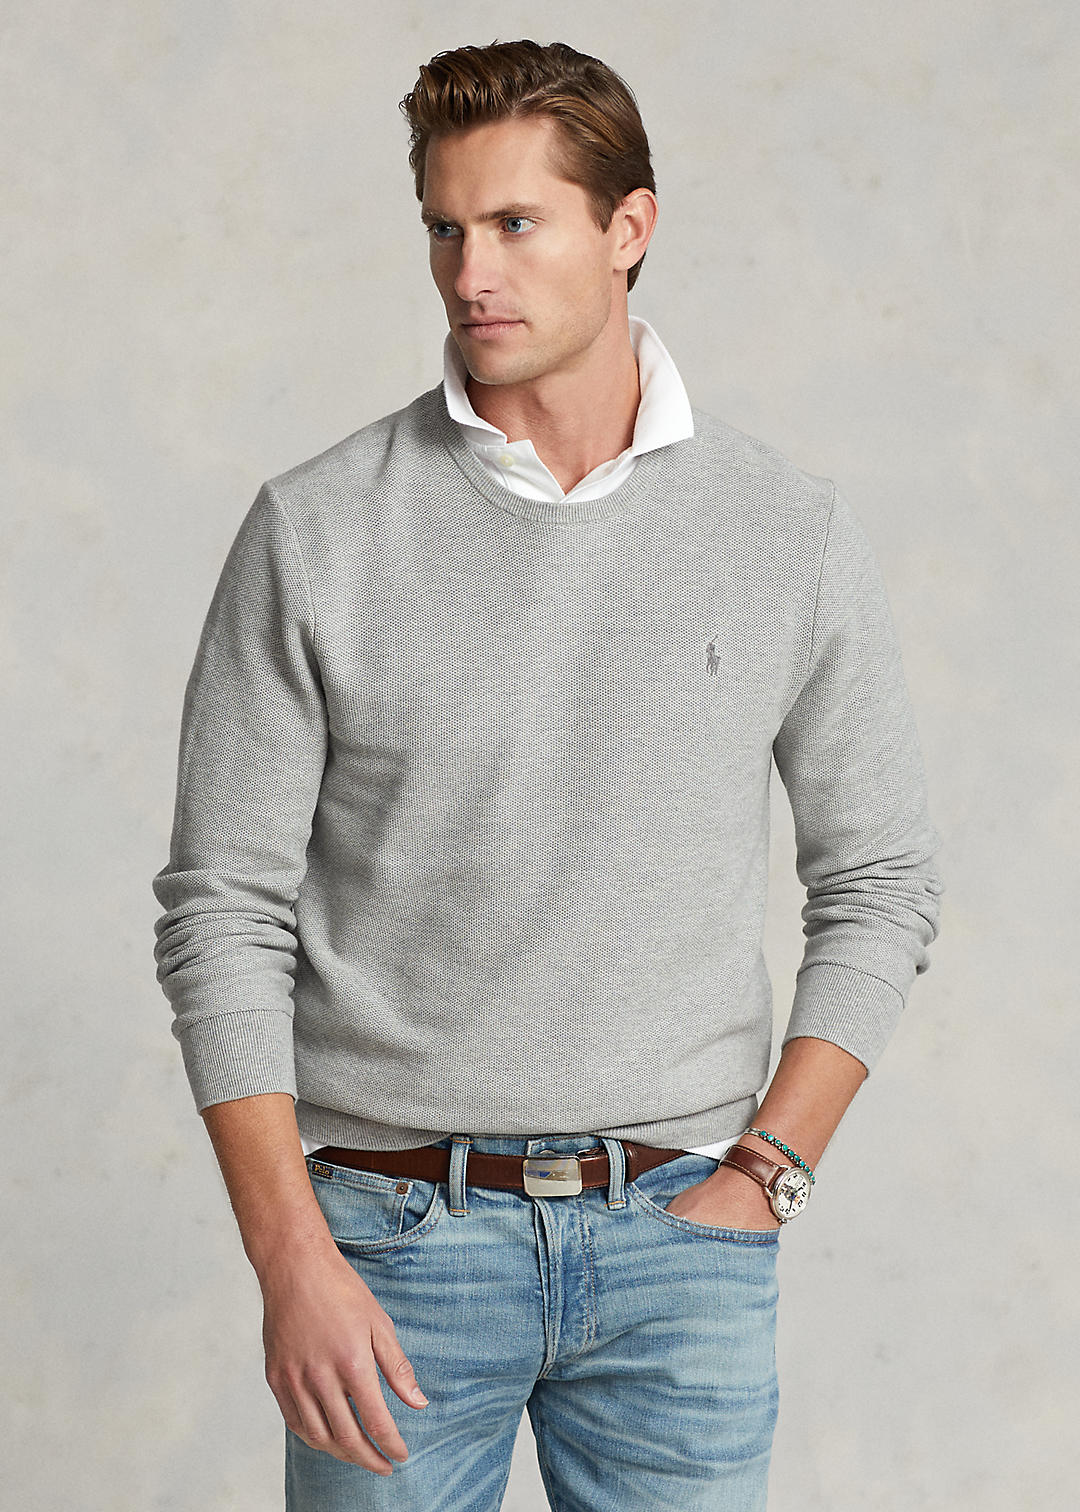 Polo Ralph Lauren Mesh-Knit Cotton Crewneck Sweater 1